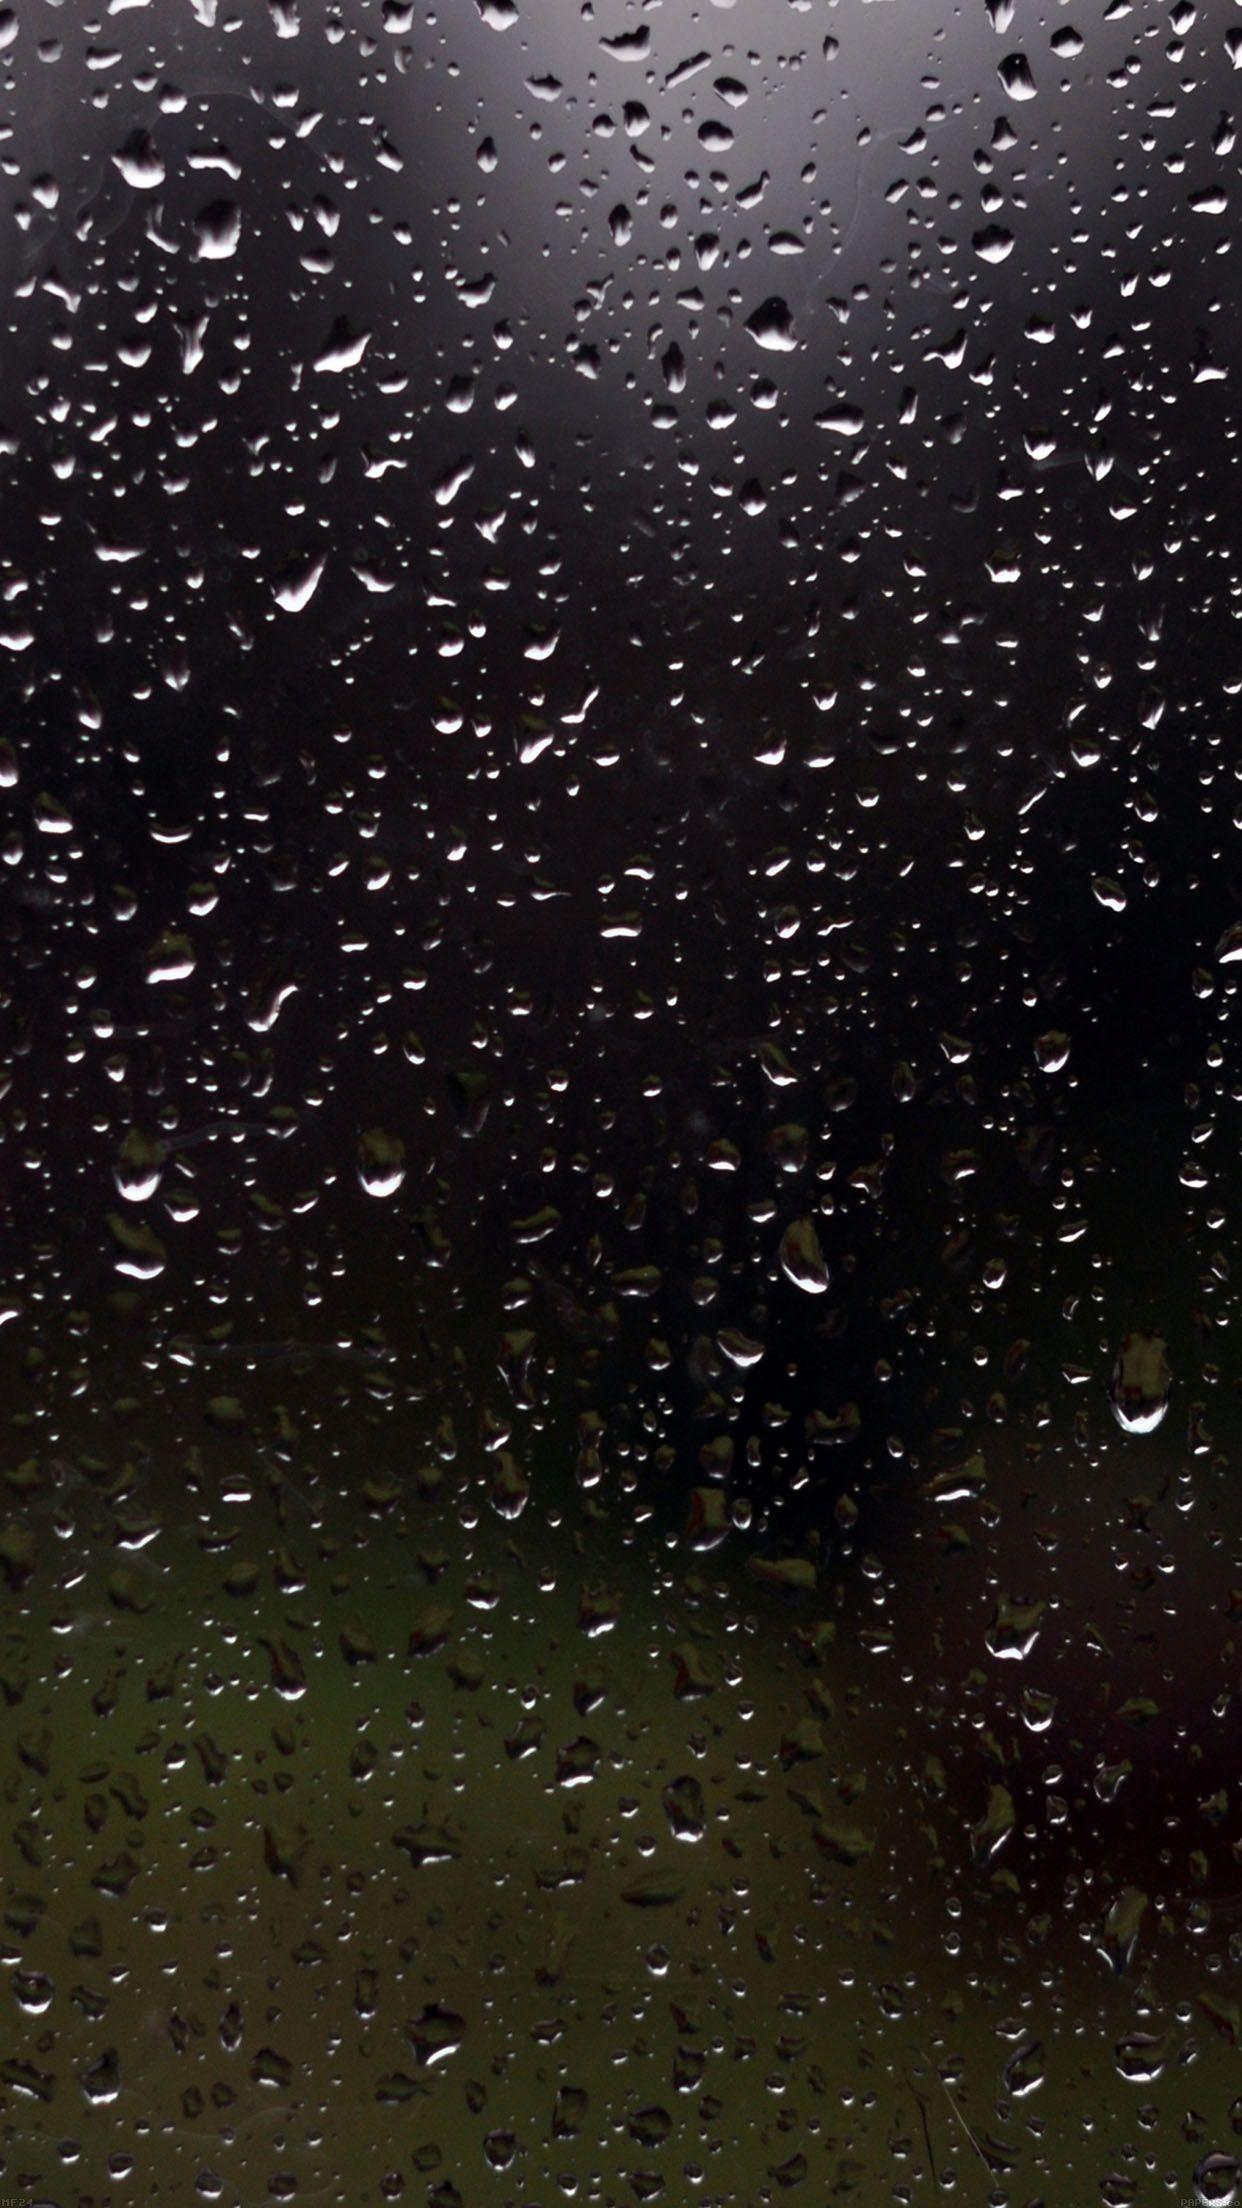 Raining Windows 10 Drops Nature Android wallpaper HD